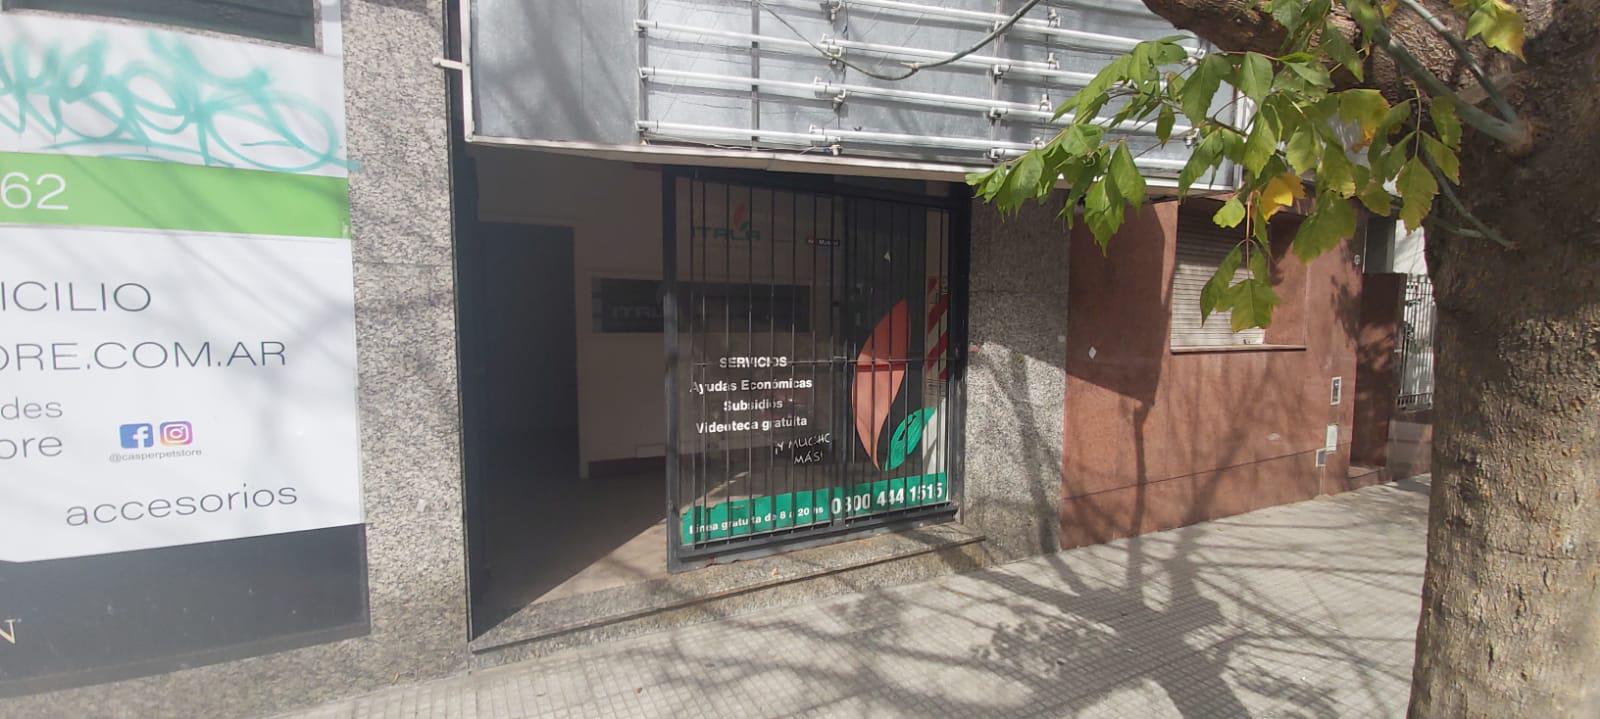 Local en  alquiler en la calle Avellaneda 614